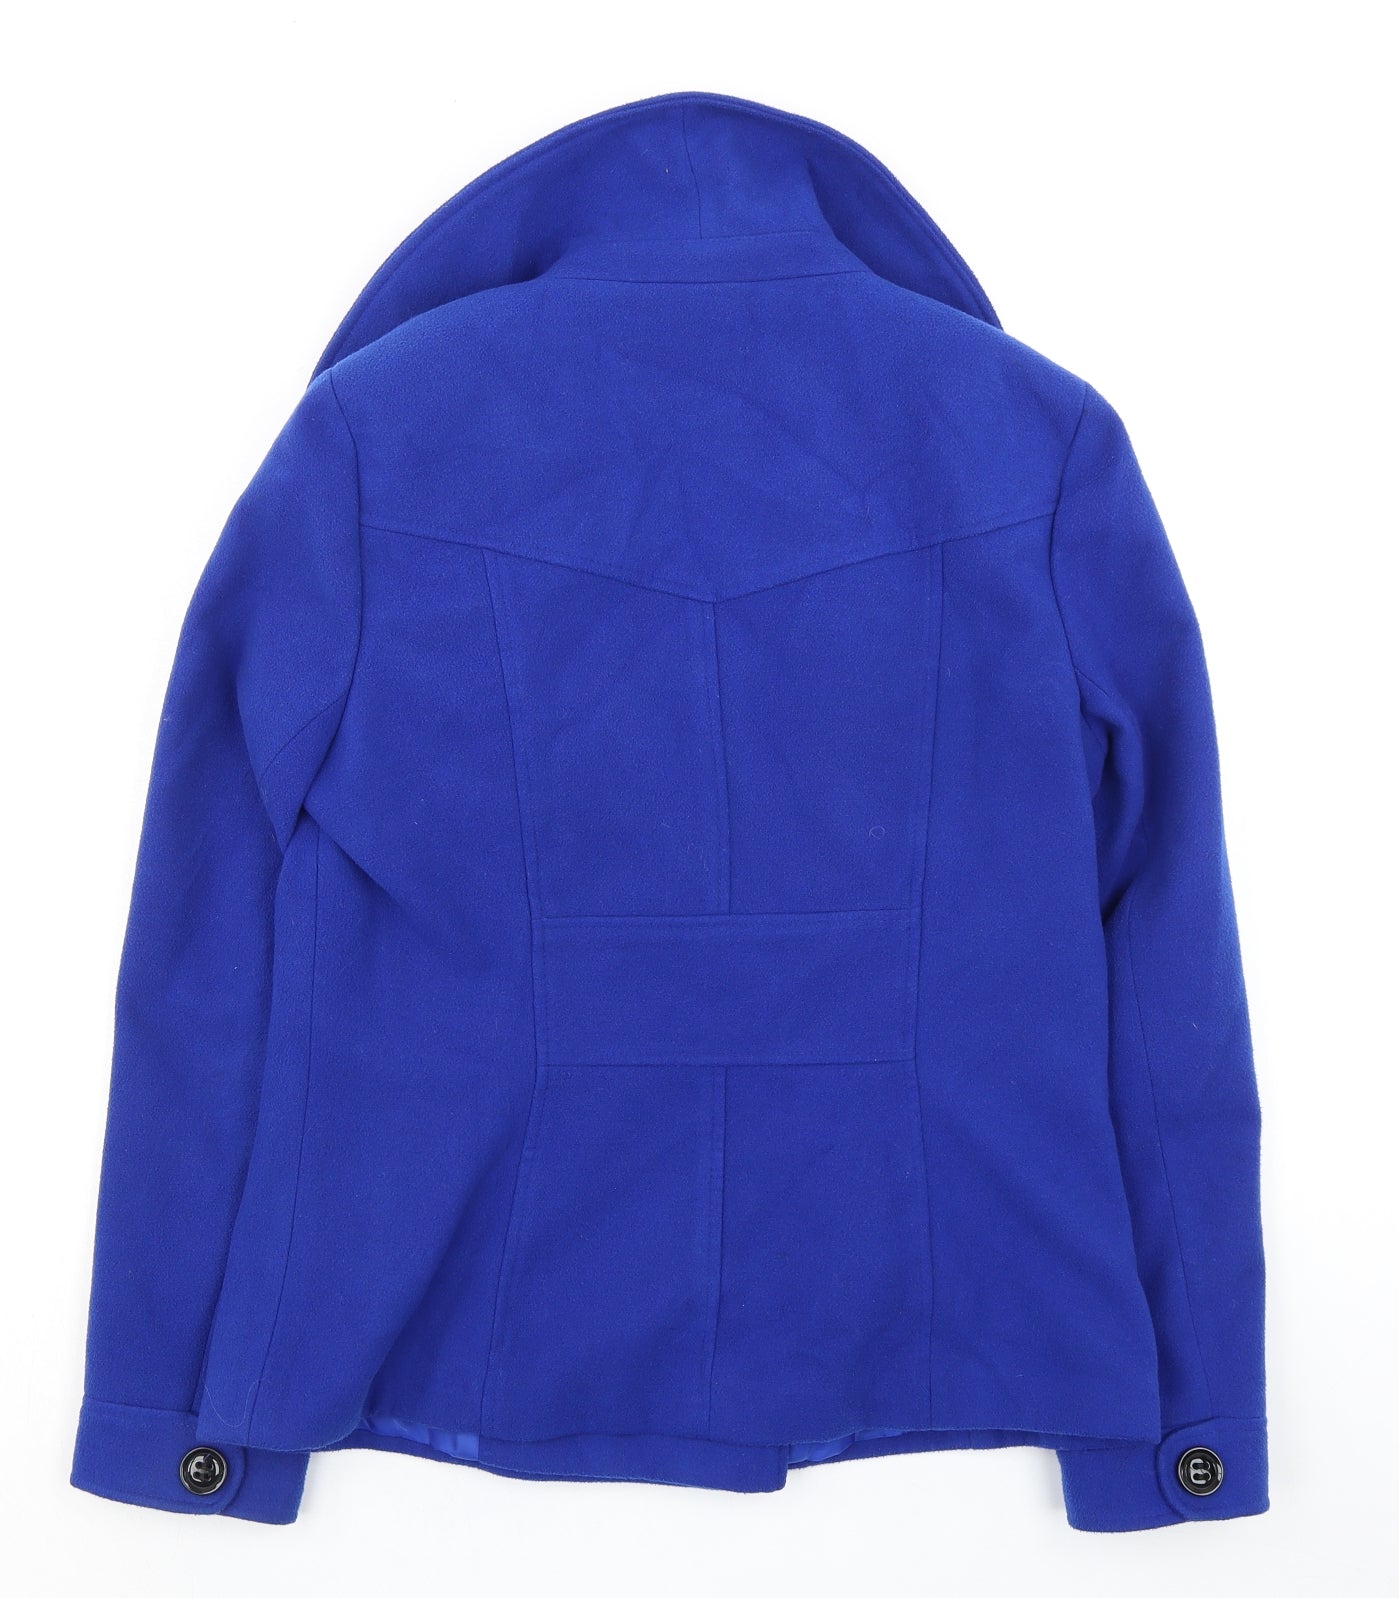 Debenhams Womens Blue Pea Coat Coat Size 14 Button - Double Breasted Jacket